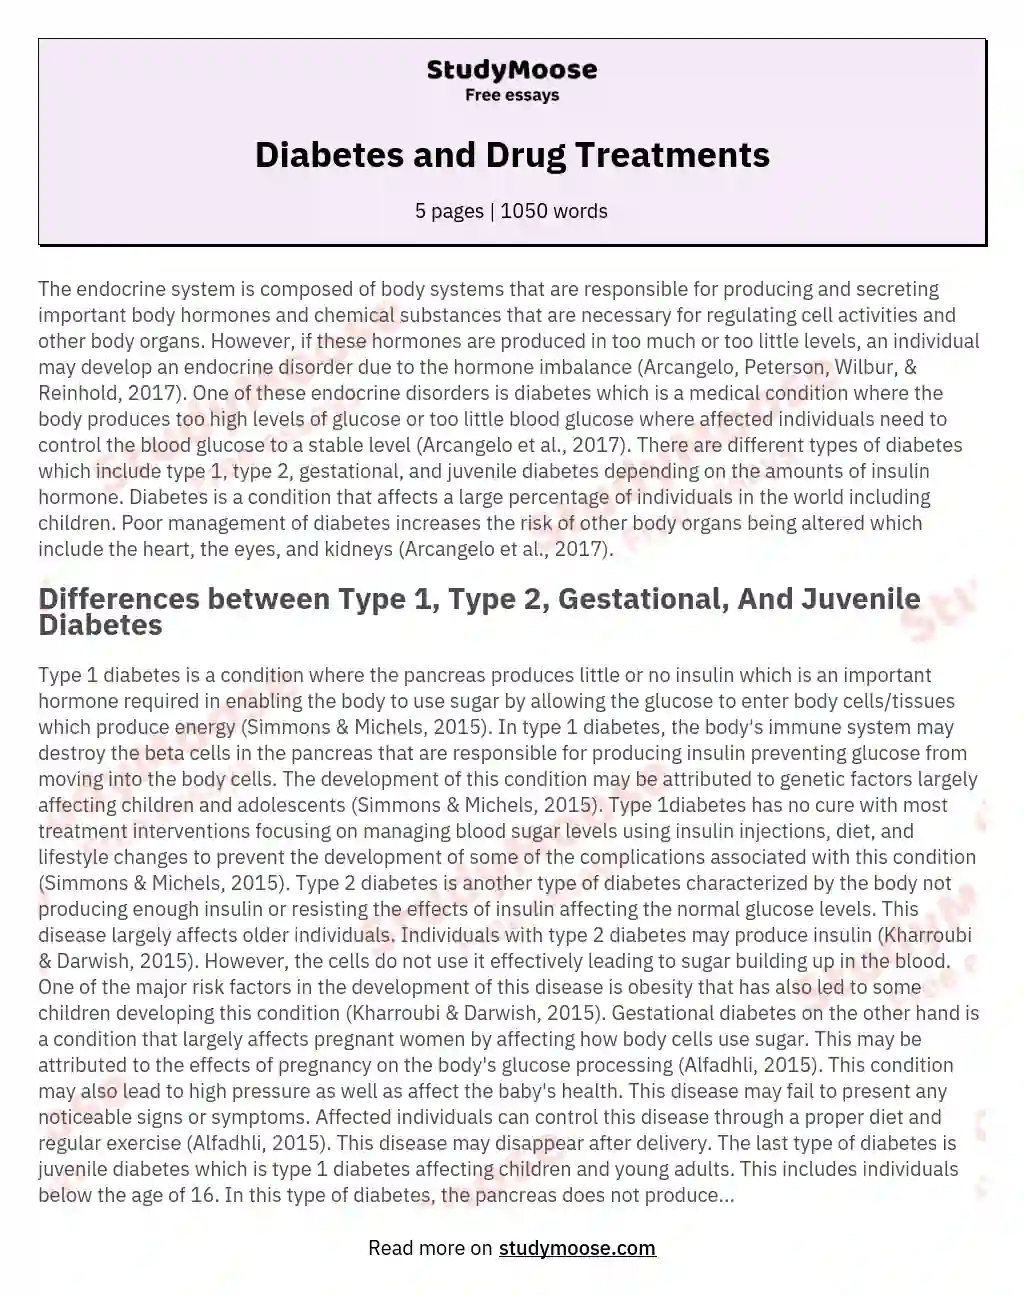 Diabetes and Drug Treatments essay